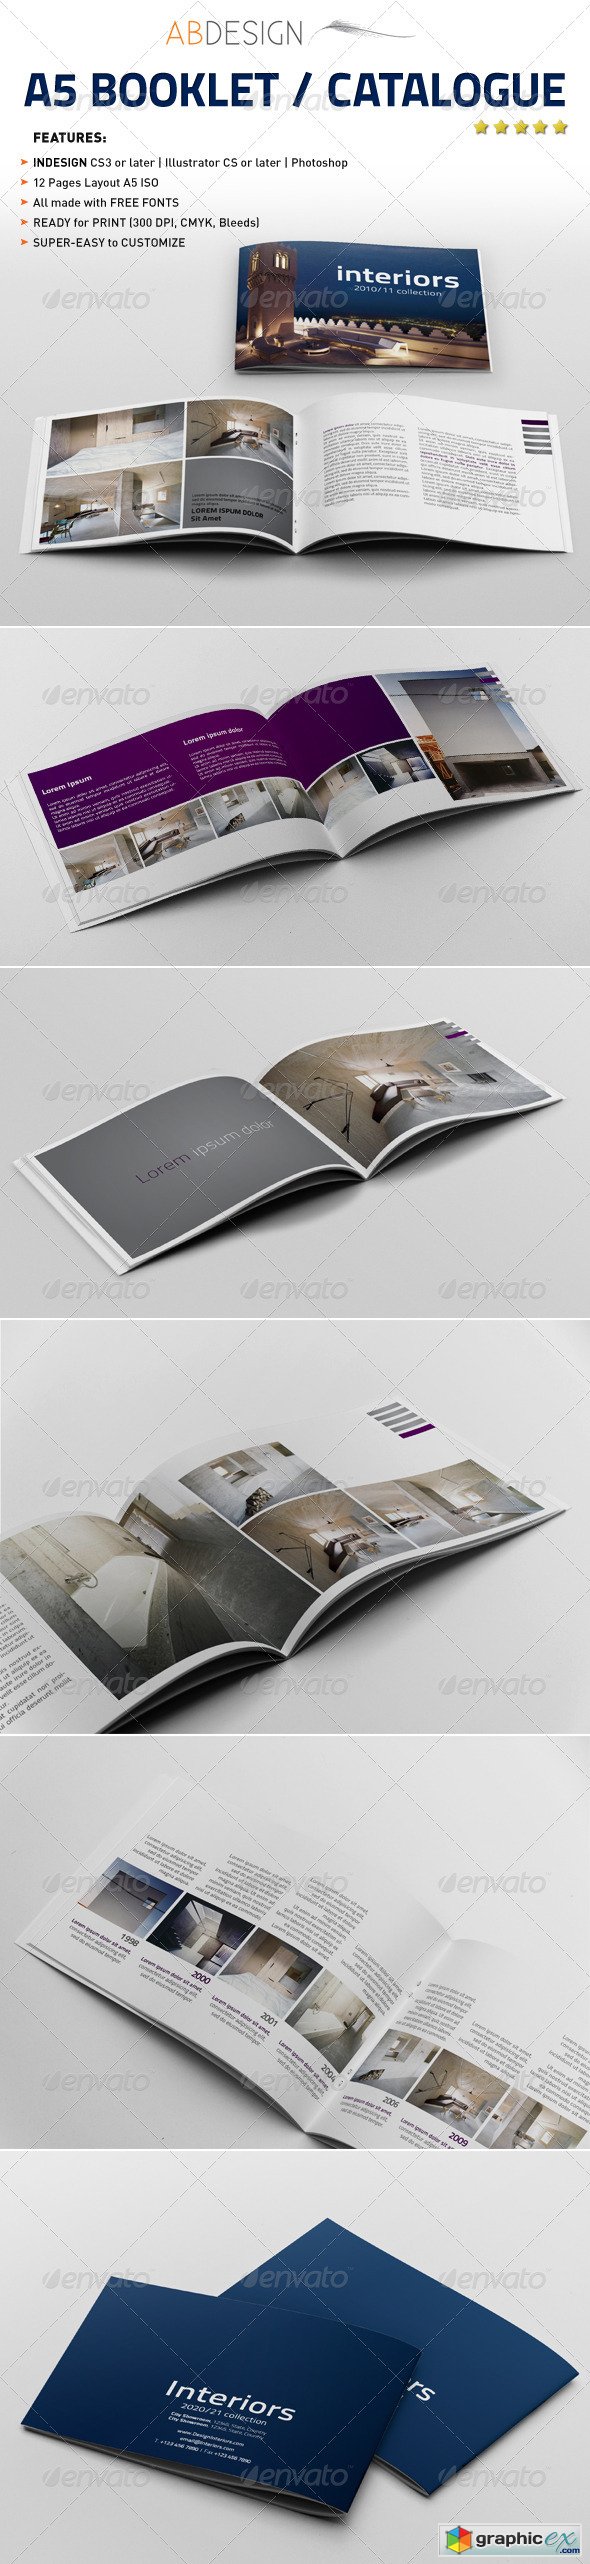 A5 Booklet / Catalogue - 159393